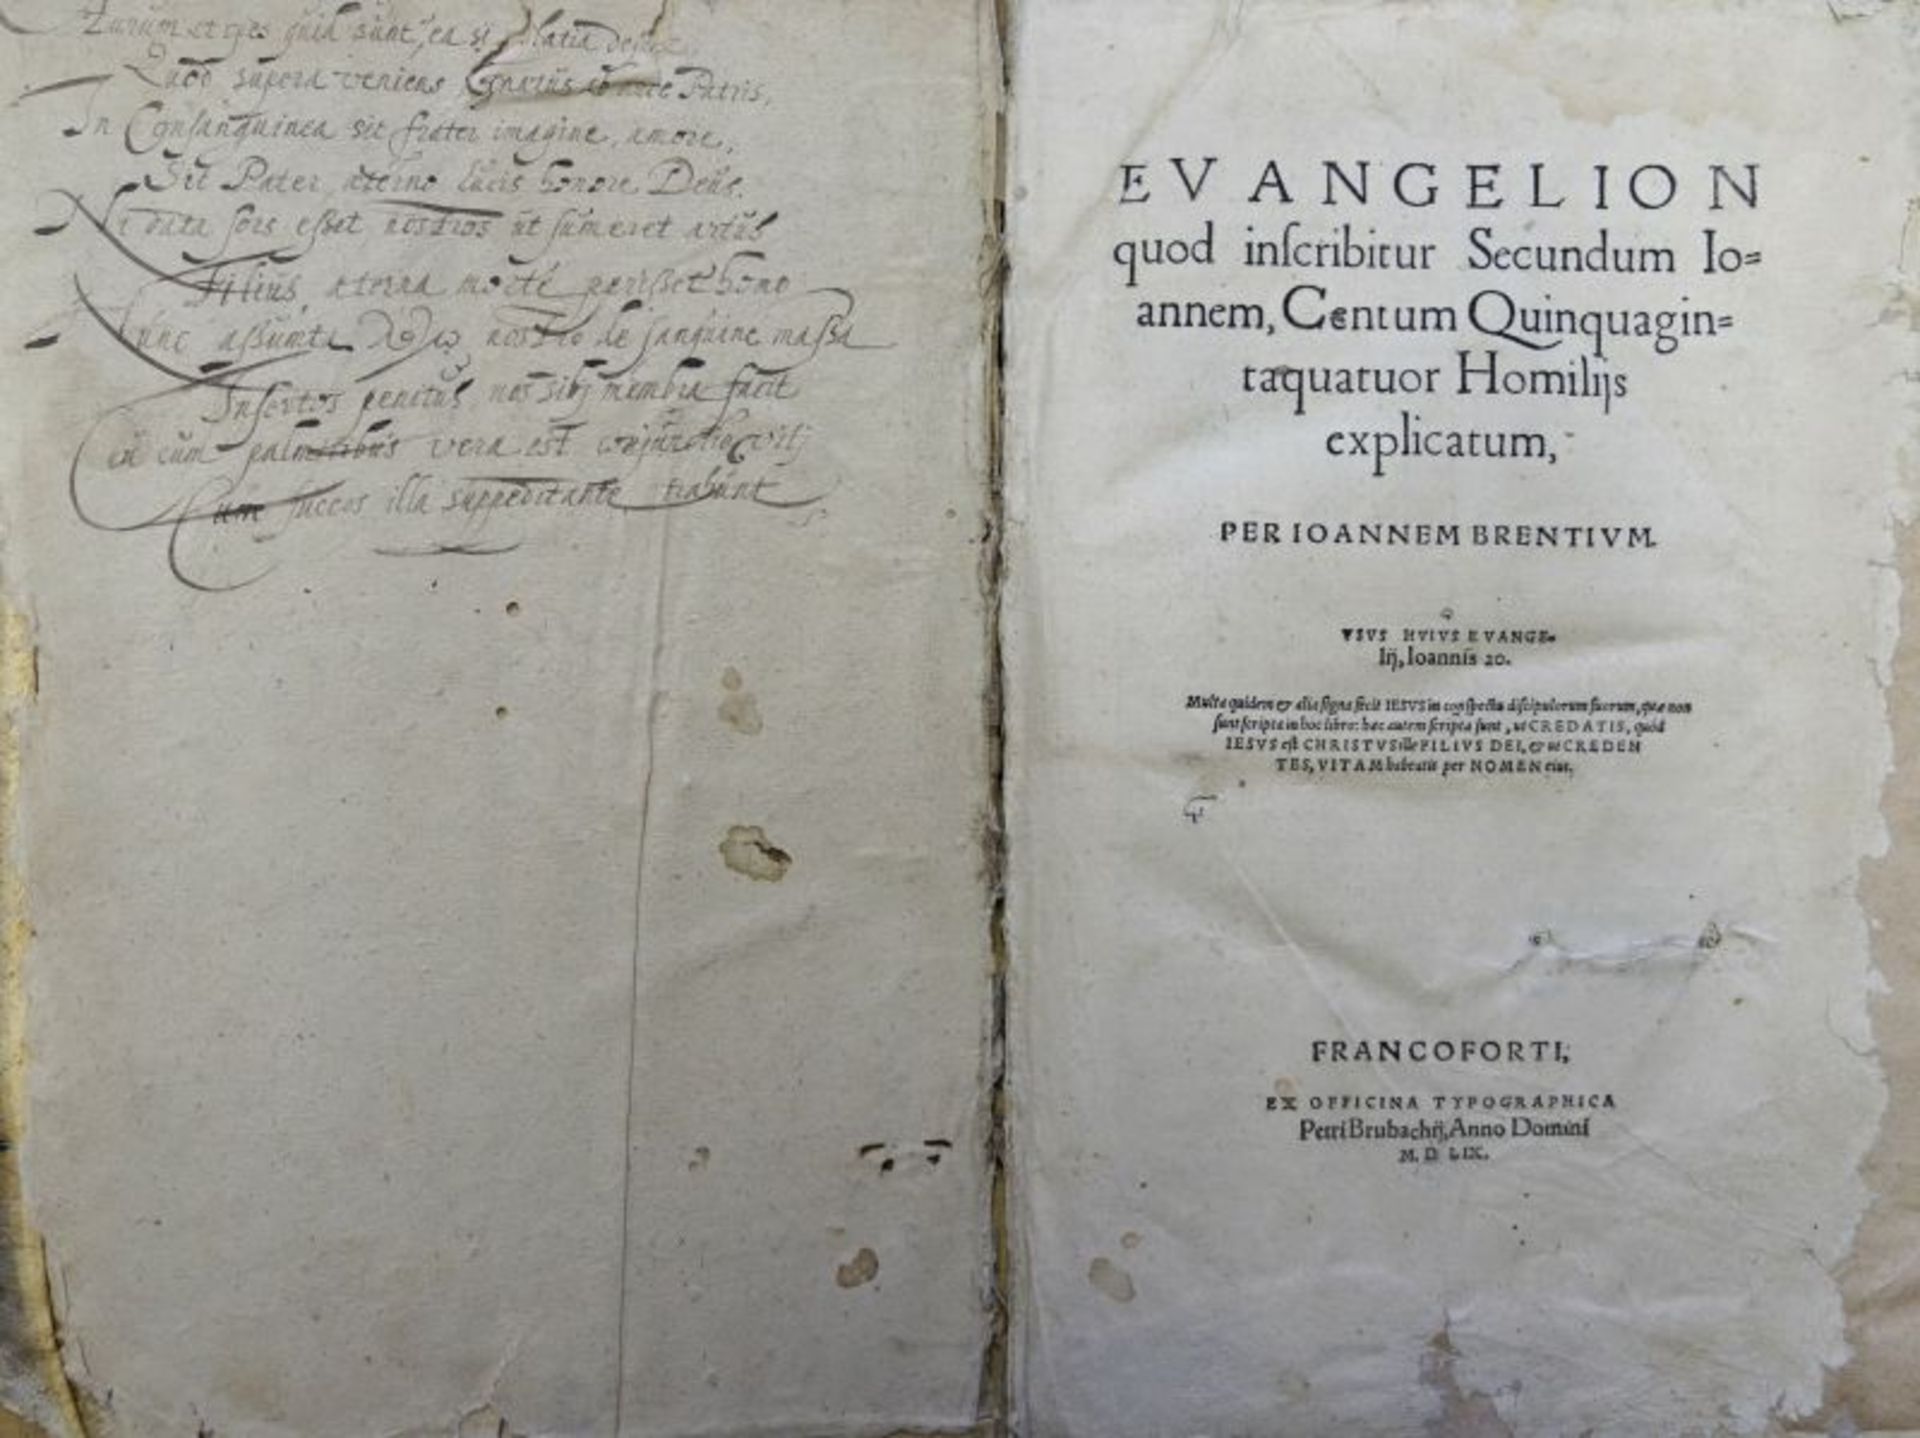 Brenz, Johannes: Evangelion quod inscribitur secundum Johannem